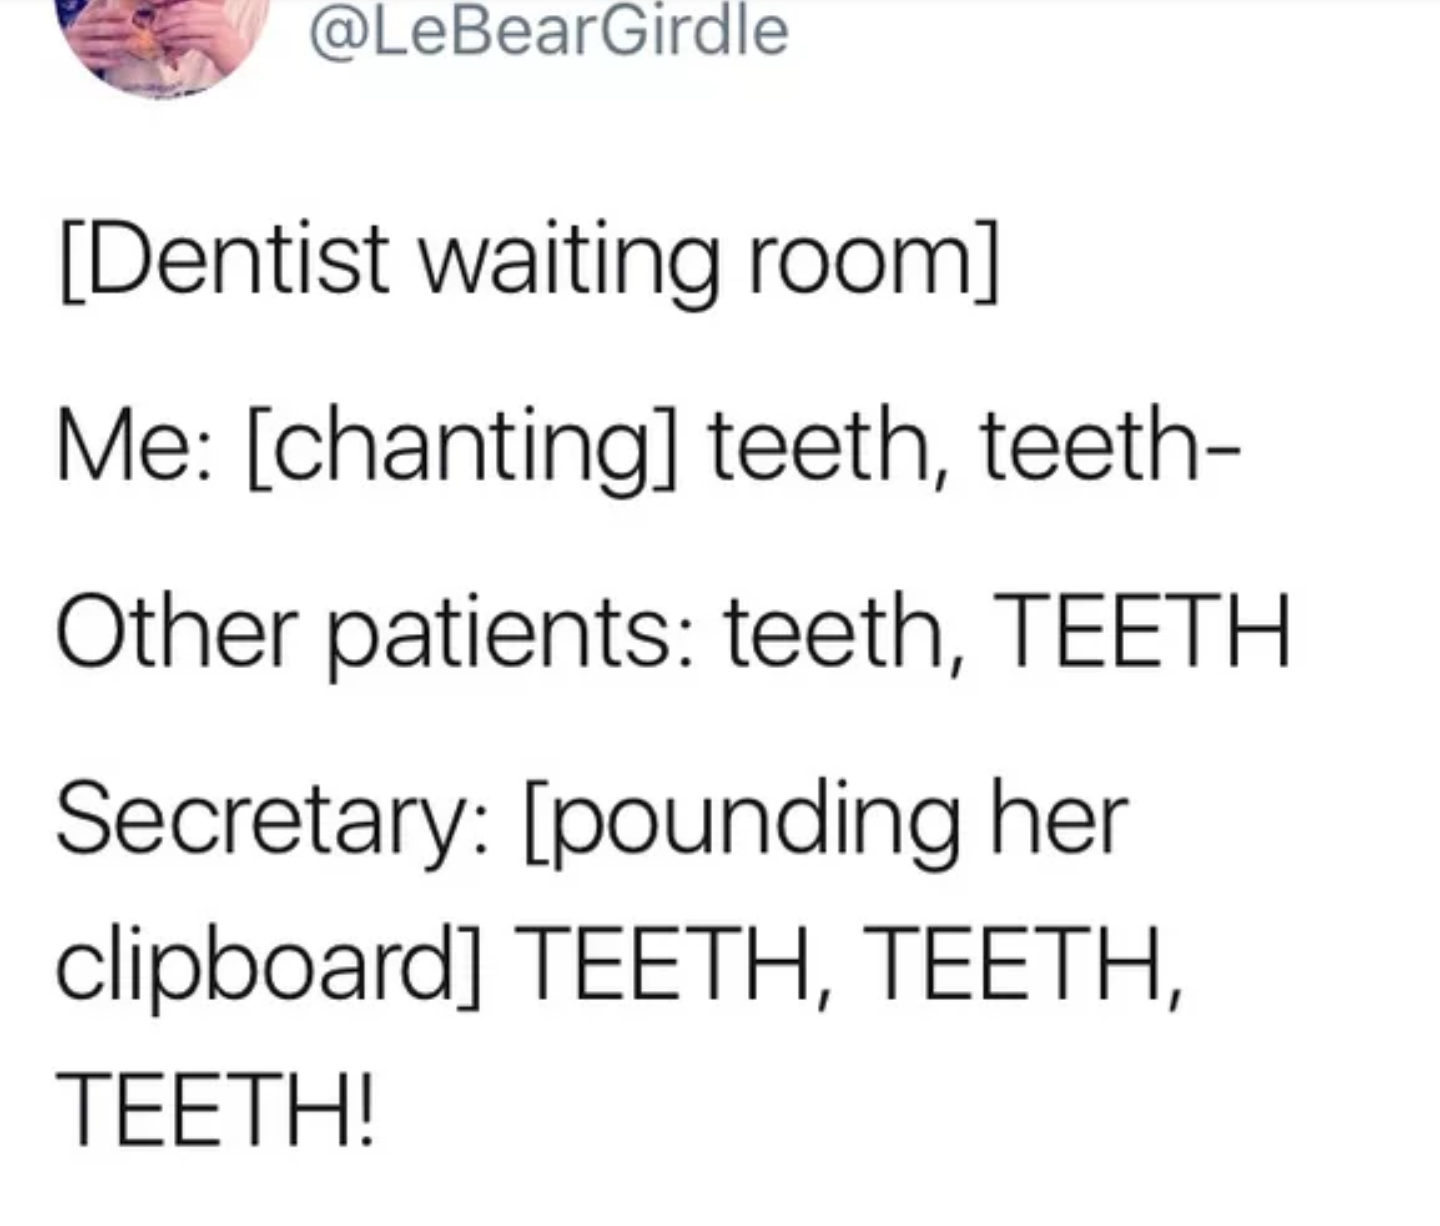 document - Dentist waiting room Me chanting teeth, teeth Other patients teeth, Teeth Secretary pounding her clipboard Teeth, Teeth, Teeth!